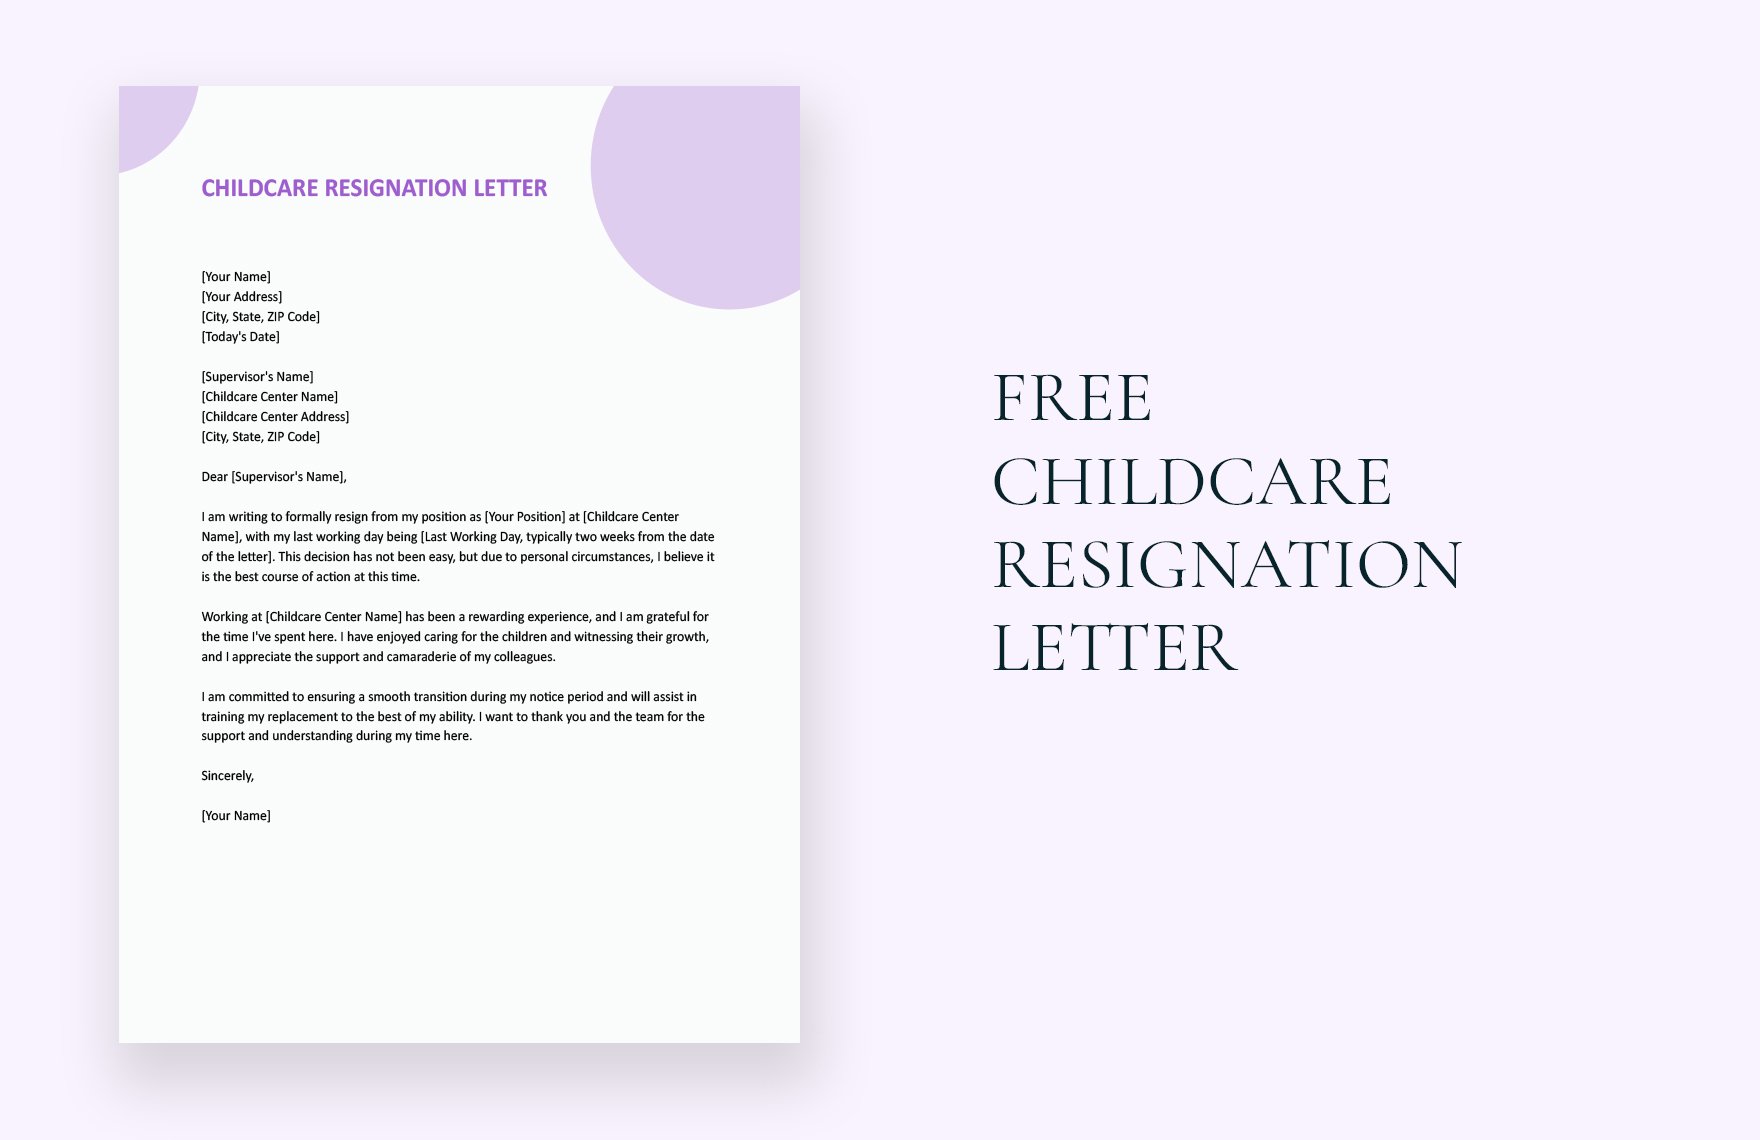 Free Childcare Resignation Letter